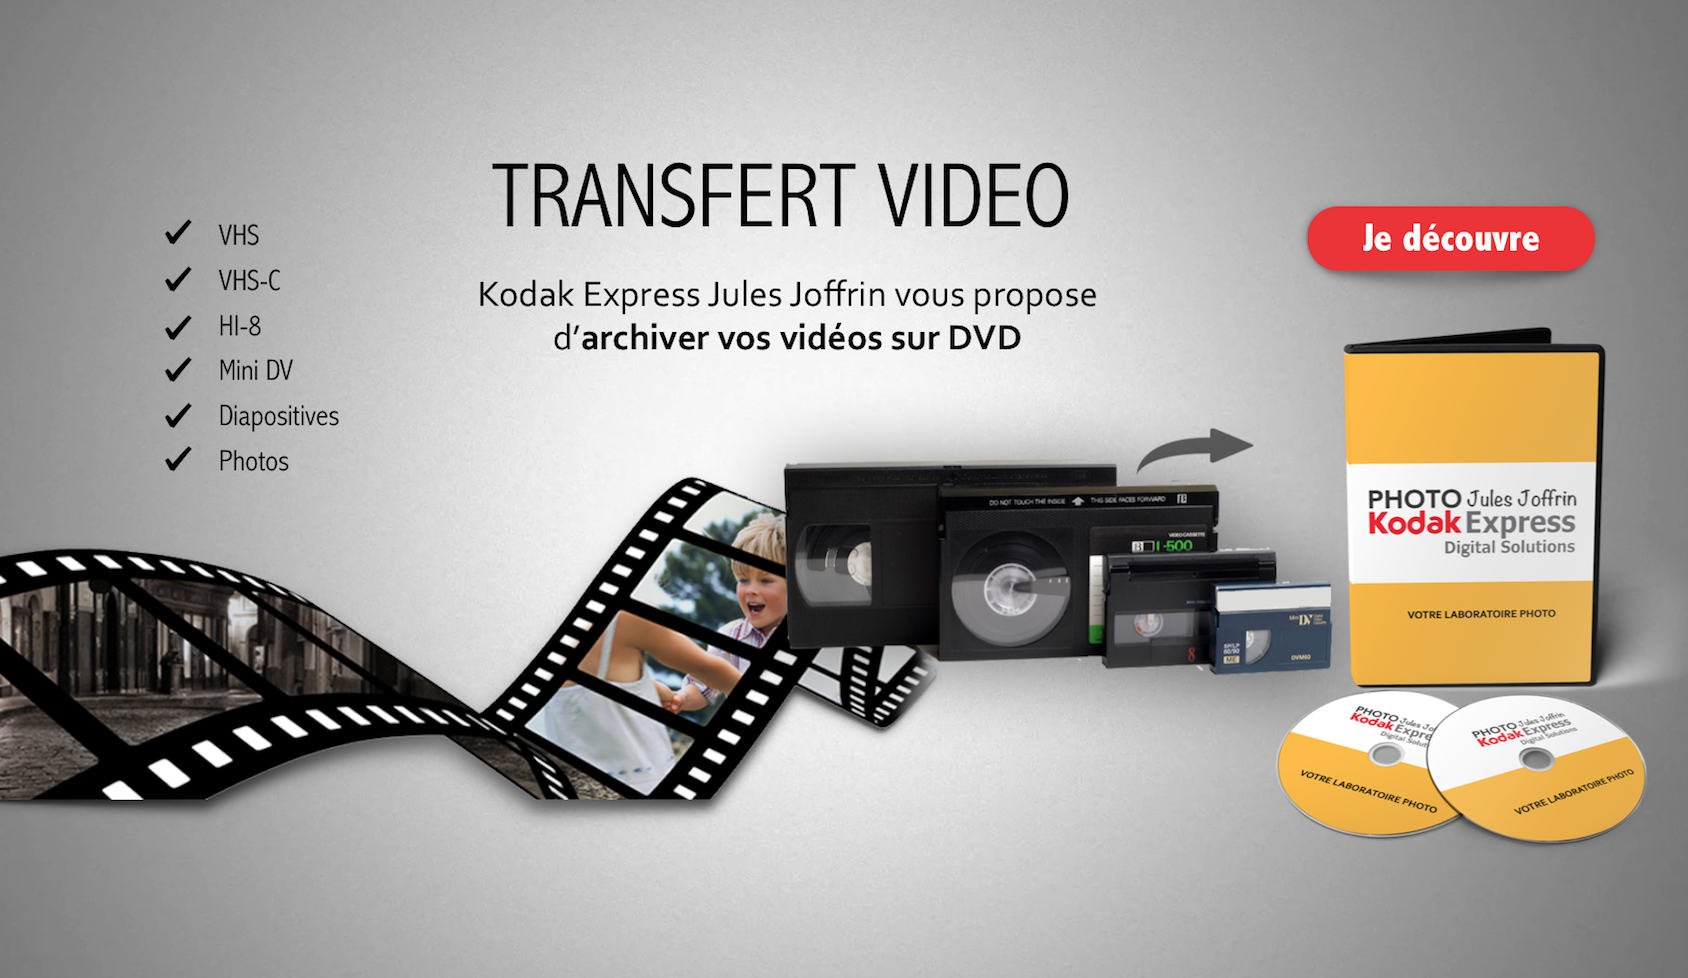 Transfert video